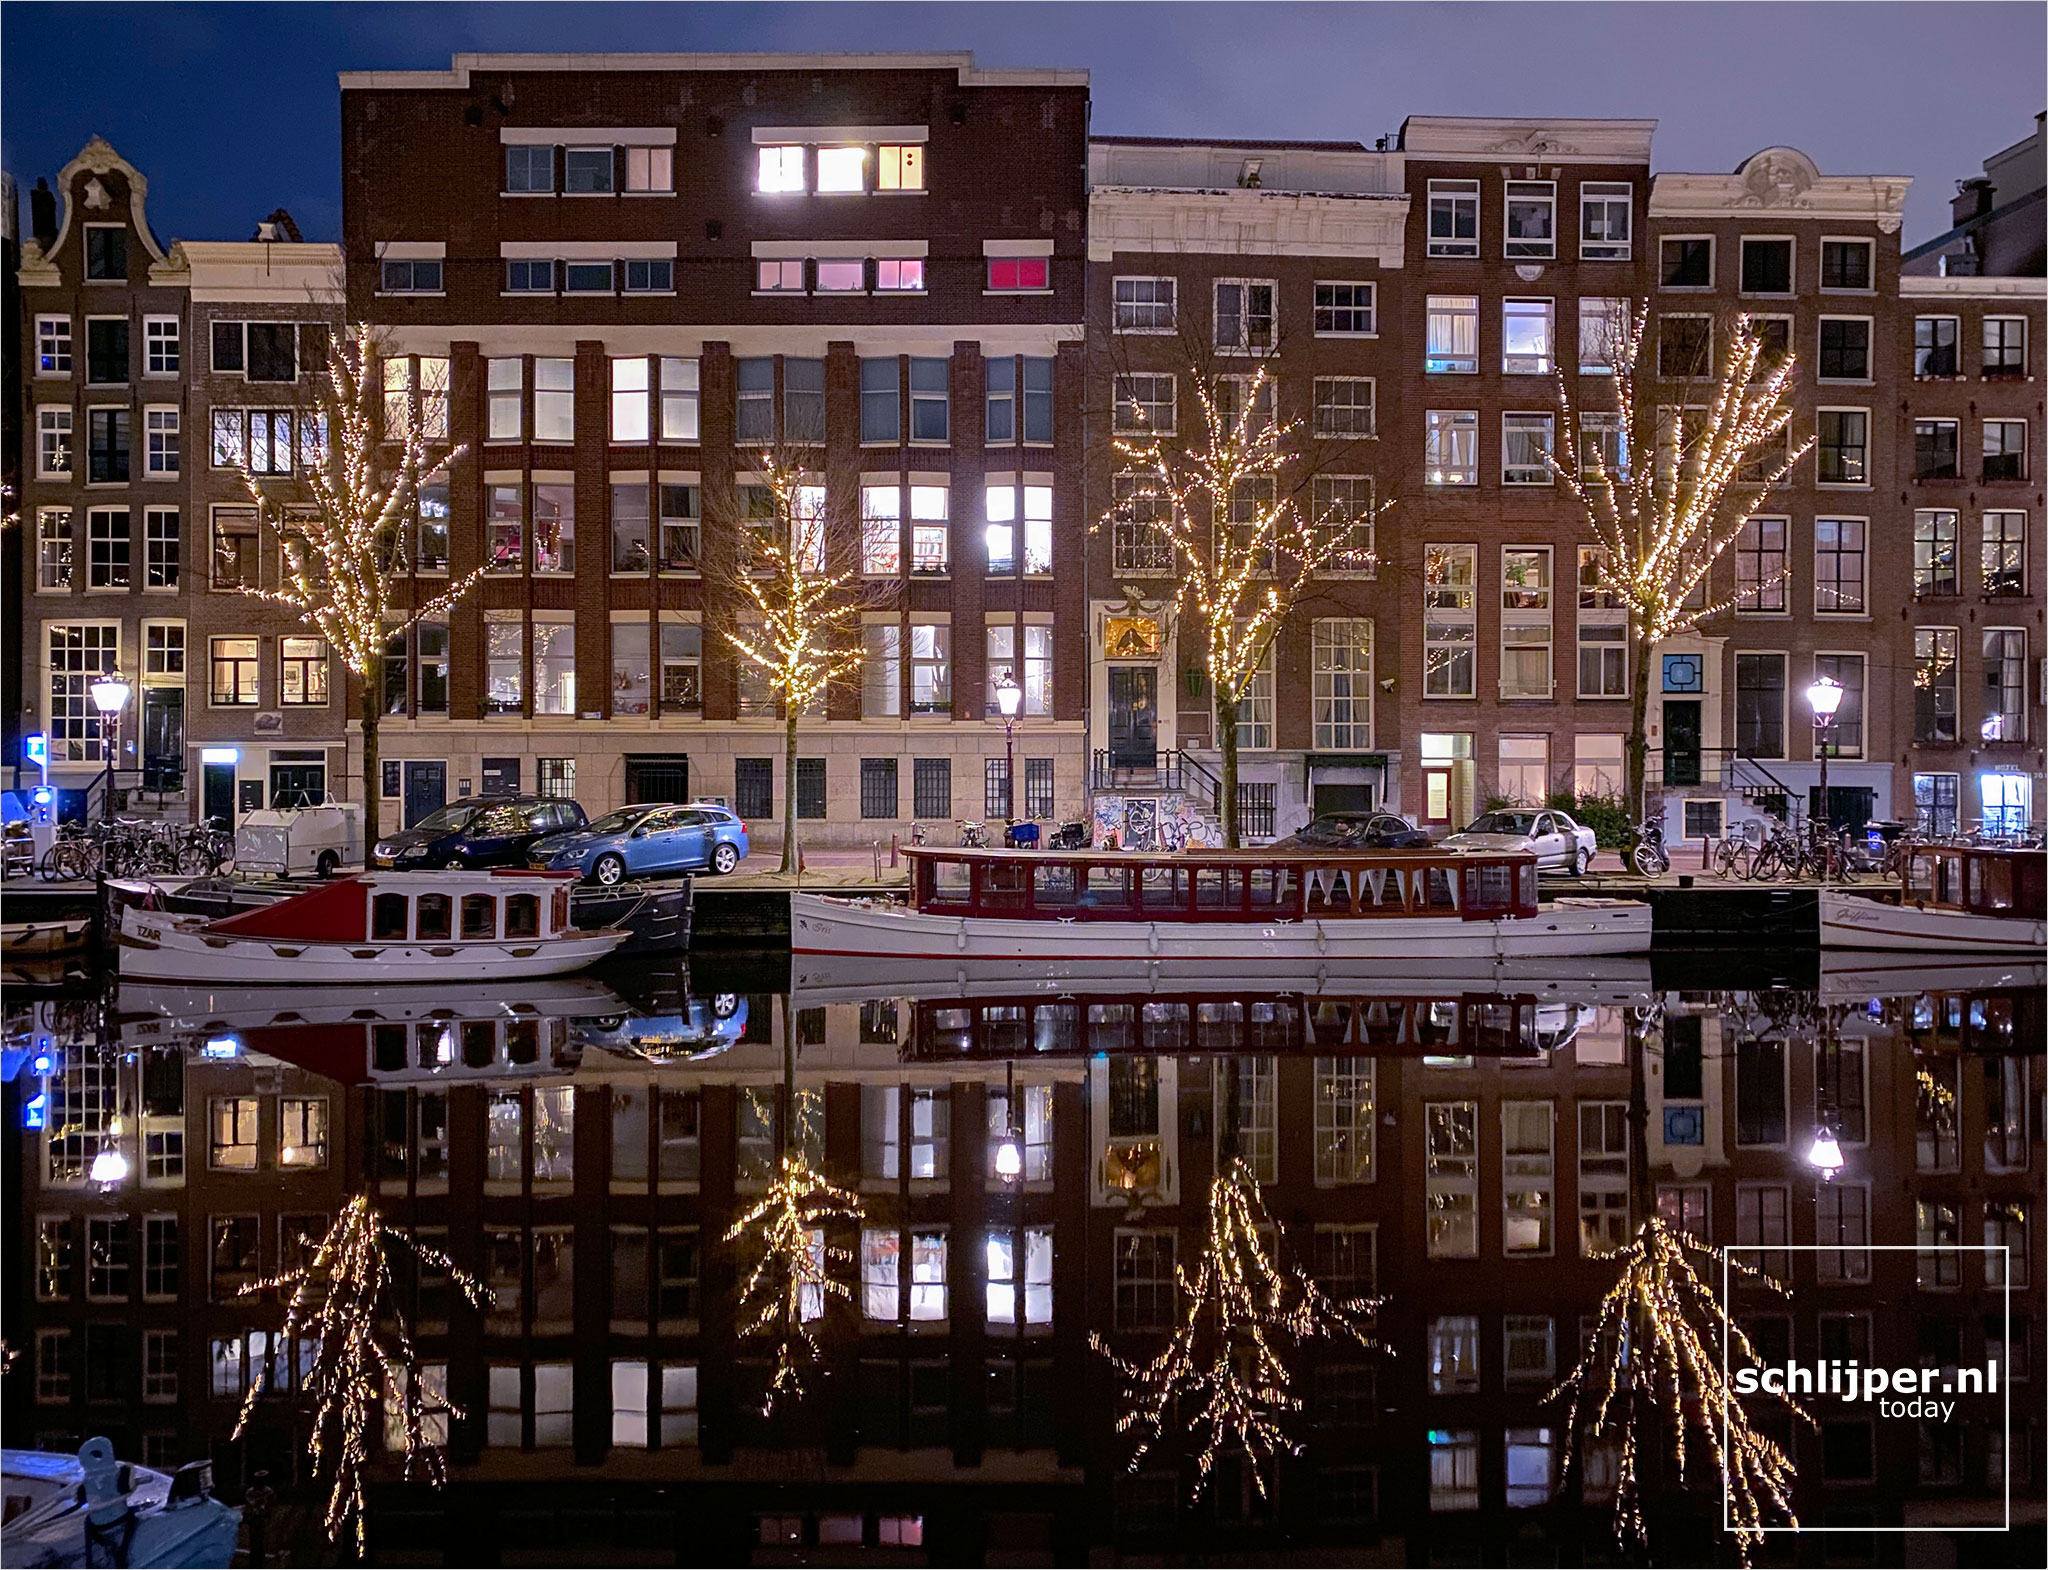 The Netherlands, Amsterdam, 23 januari 2021